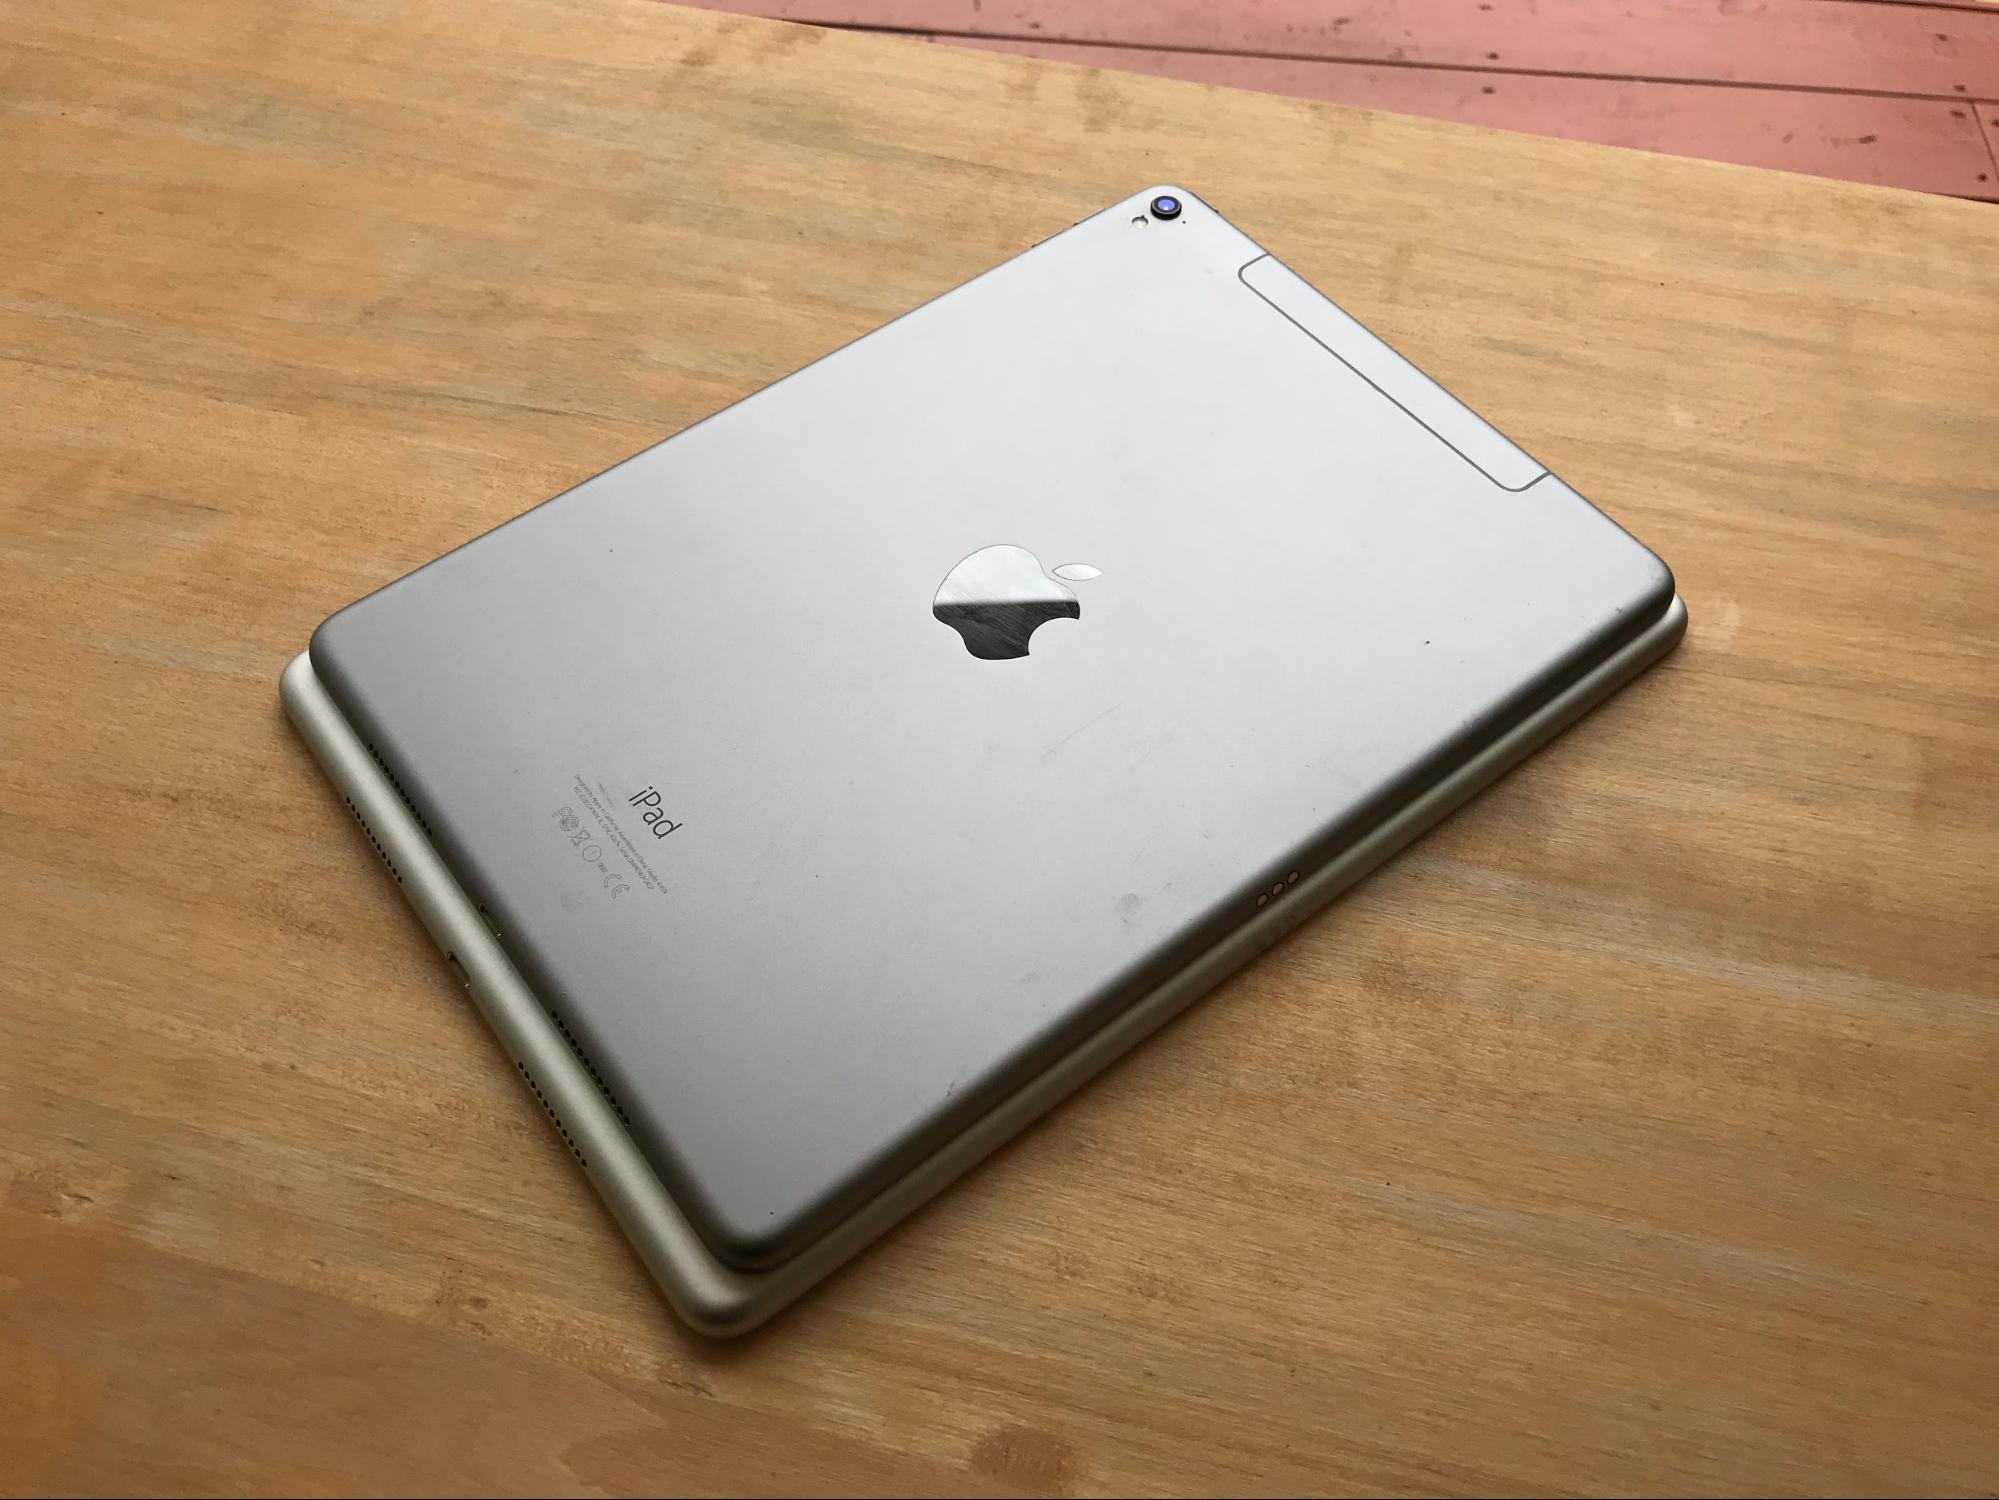 Apple's 10.5-inch iPad Pro Aims for the Sweet Spot - TidBITS